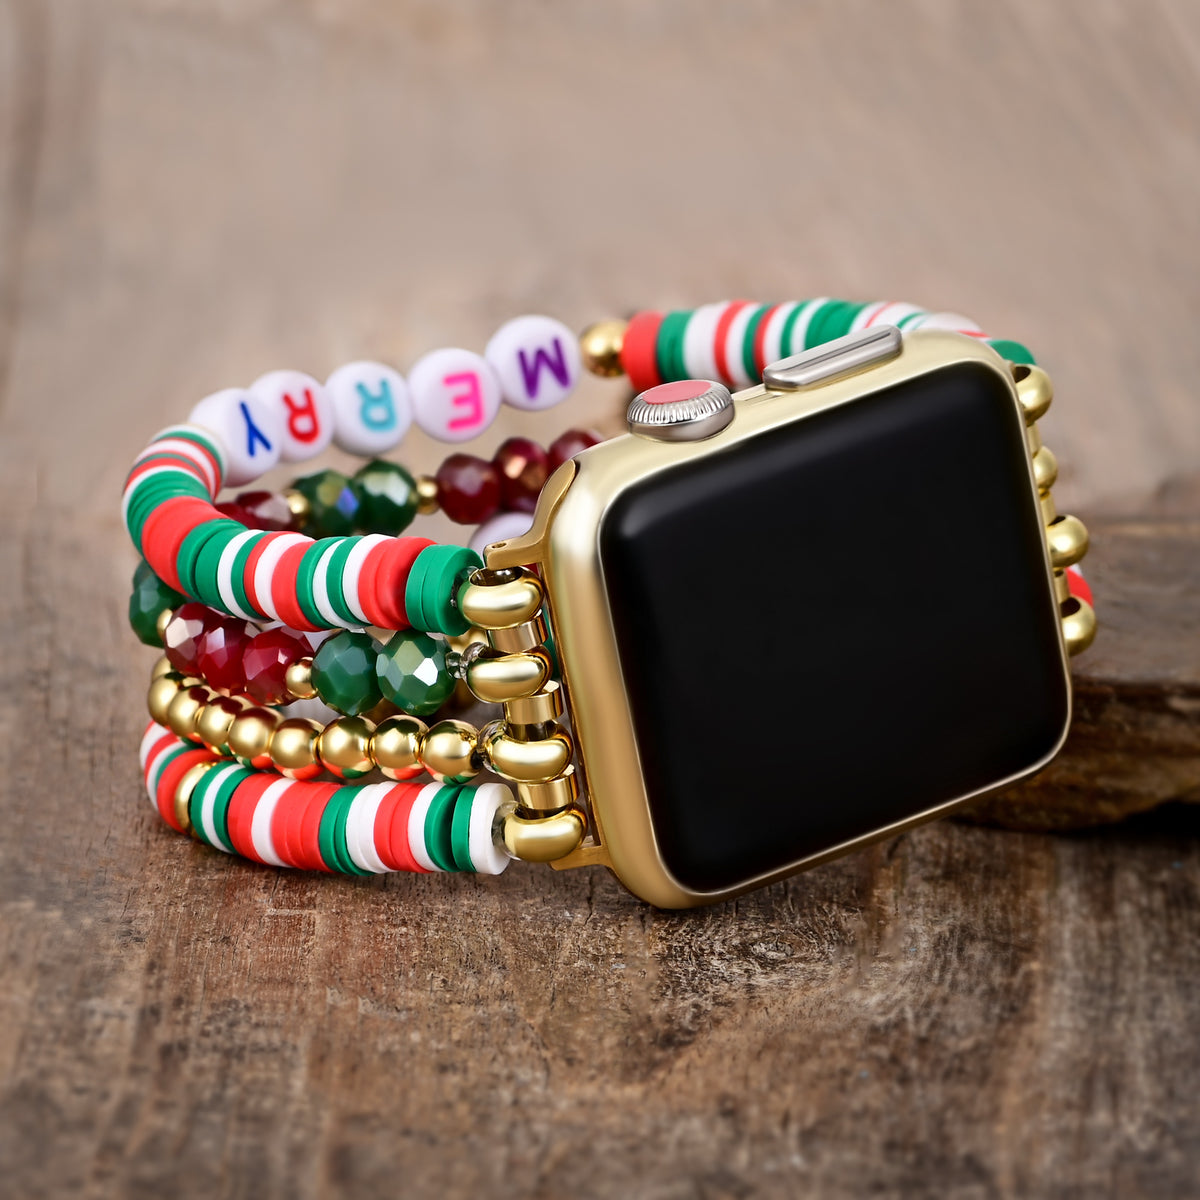 Merry Cane Stretch Apple Watch Strap